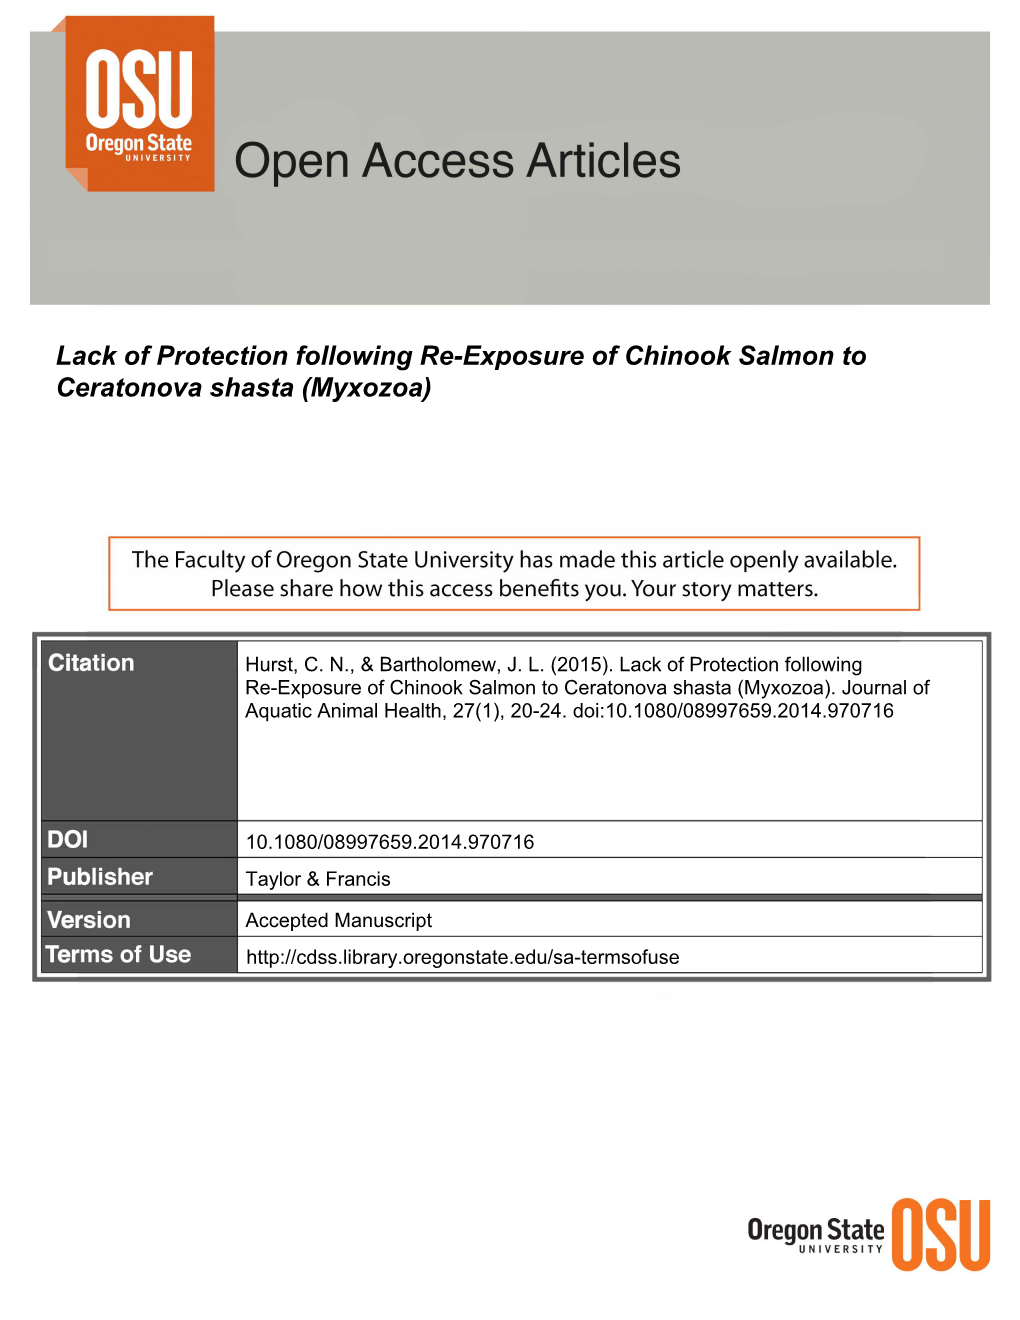 Lack of Protection Following Re-Exposure of Chinook Salmon to Ceratonova Shasta (Myxozoa)